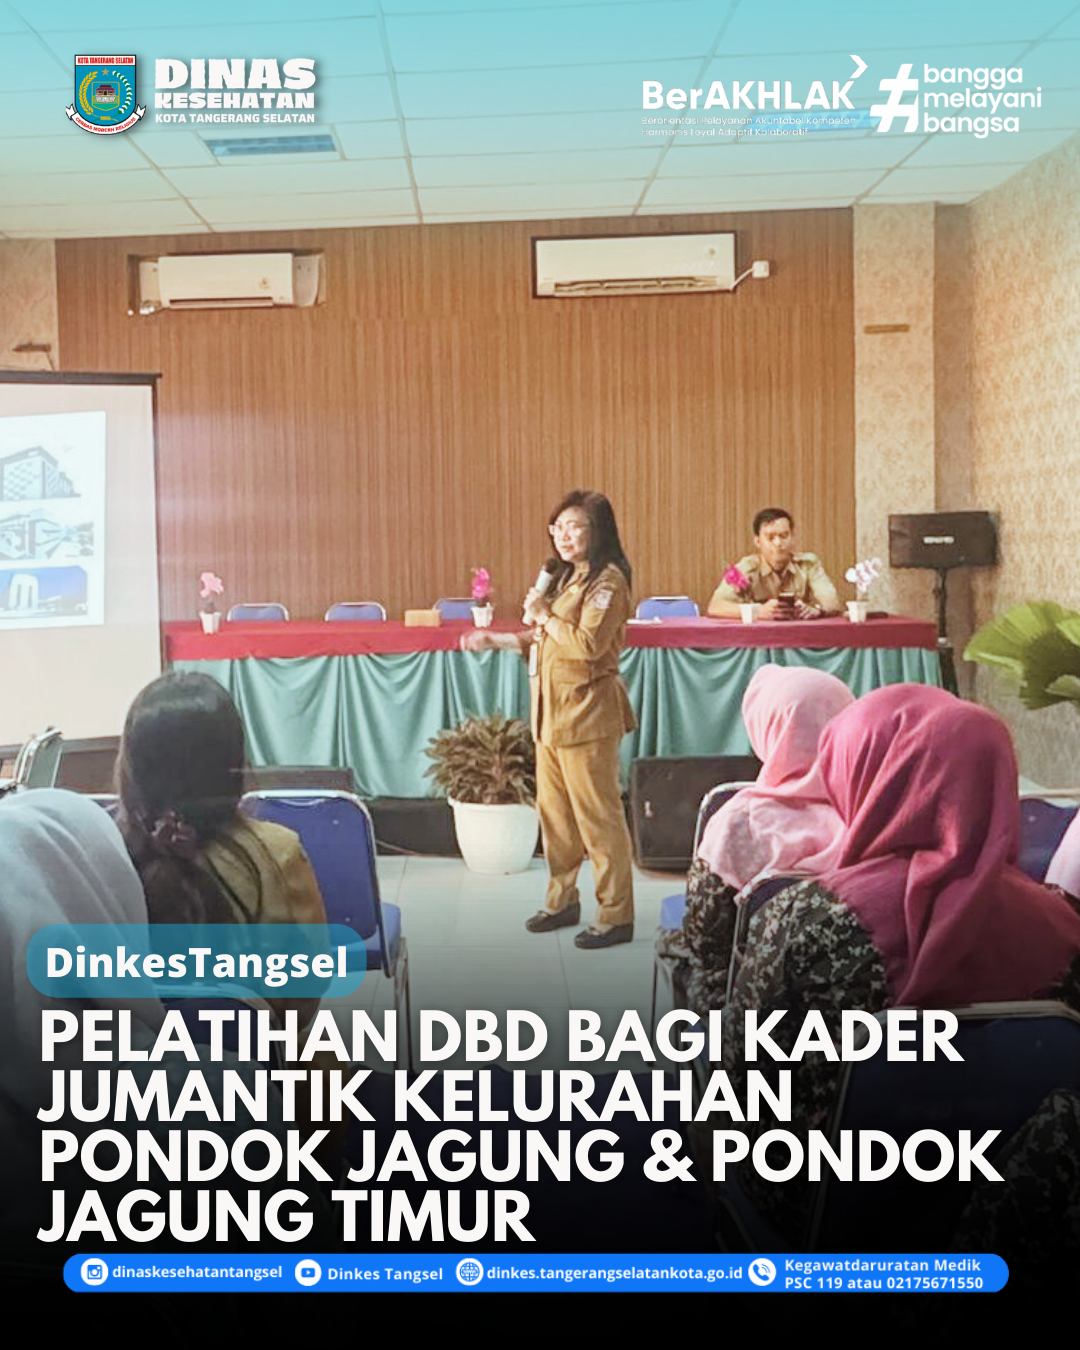 Pelatihan DBD bagi kader jumantik kelurahan pondok jagung & pondok jagung timur